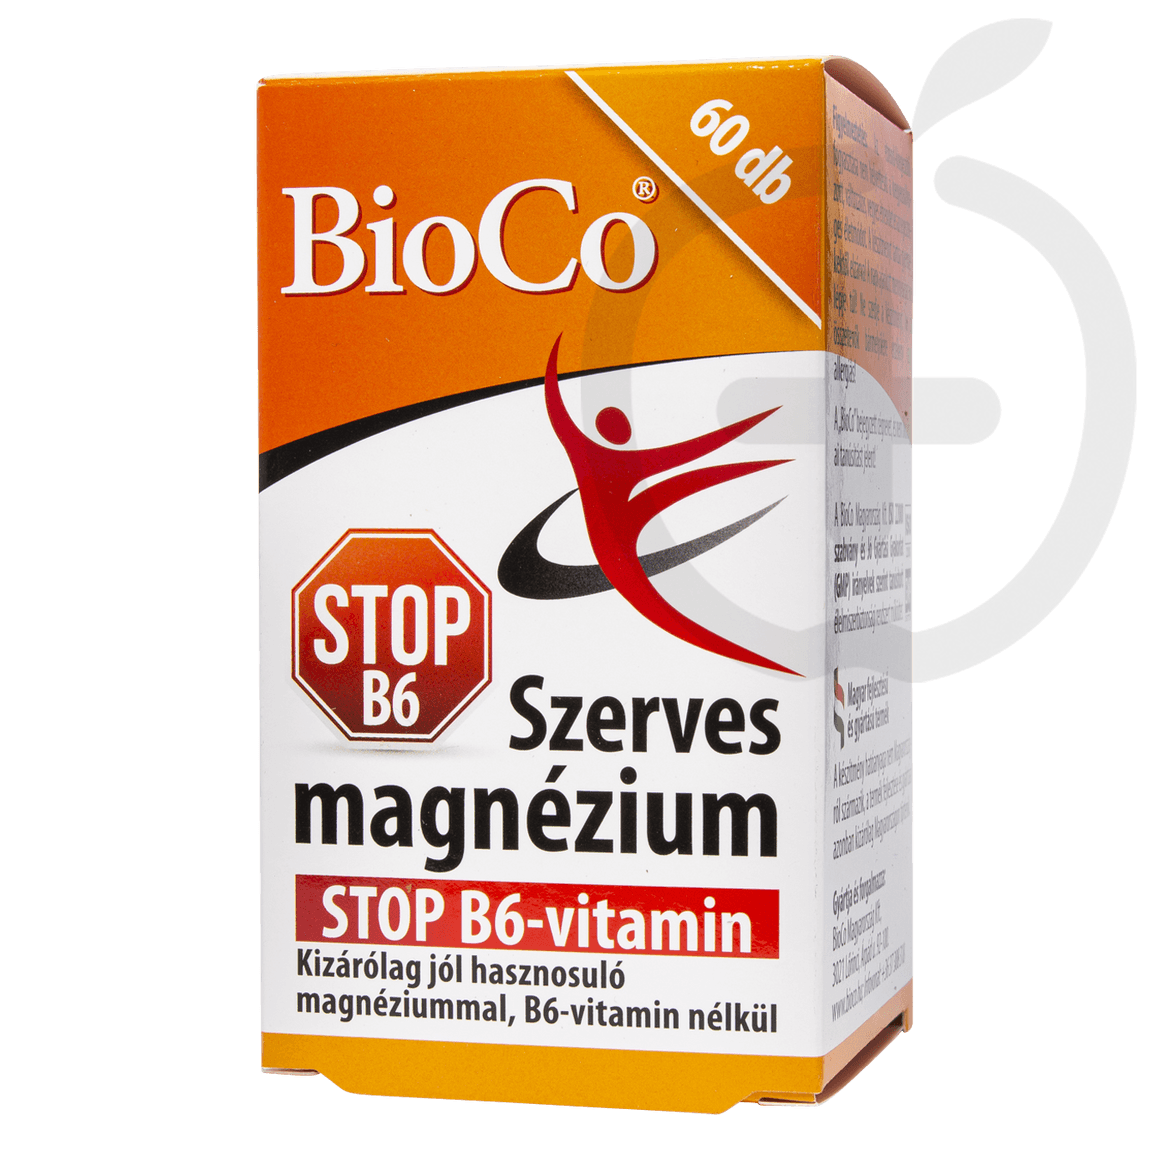 BioCo Szerves Magnézium Stop B6-vitamin tabletta